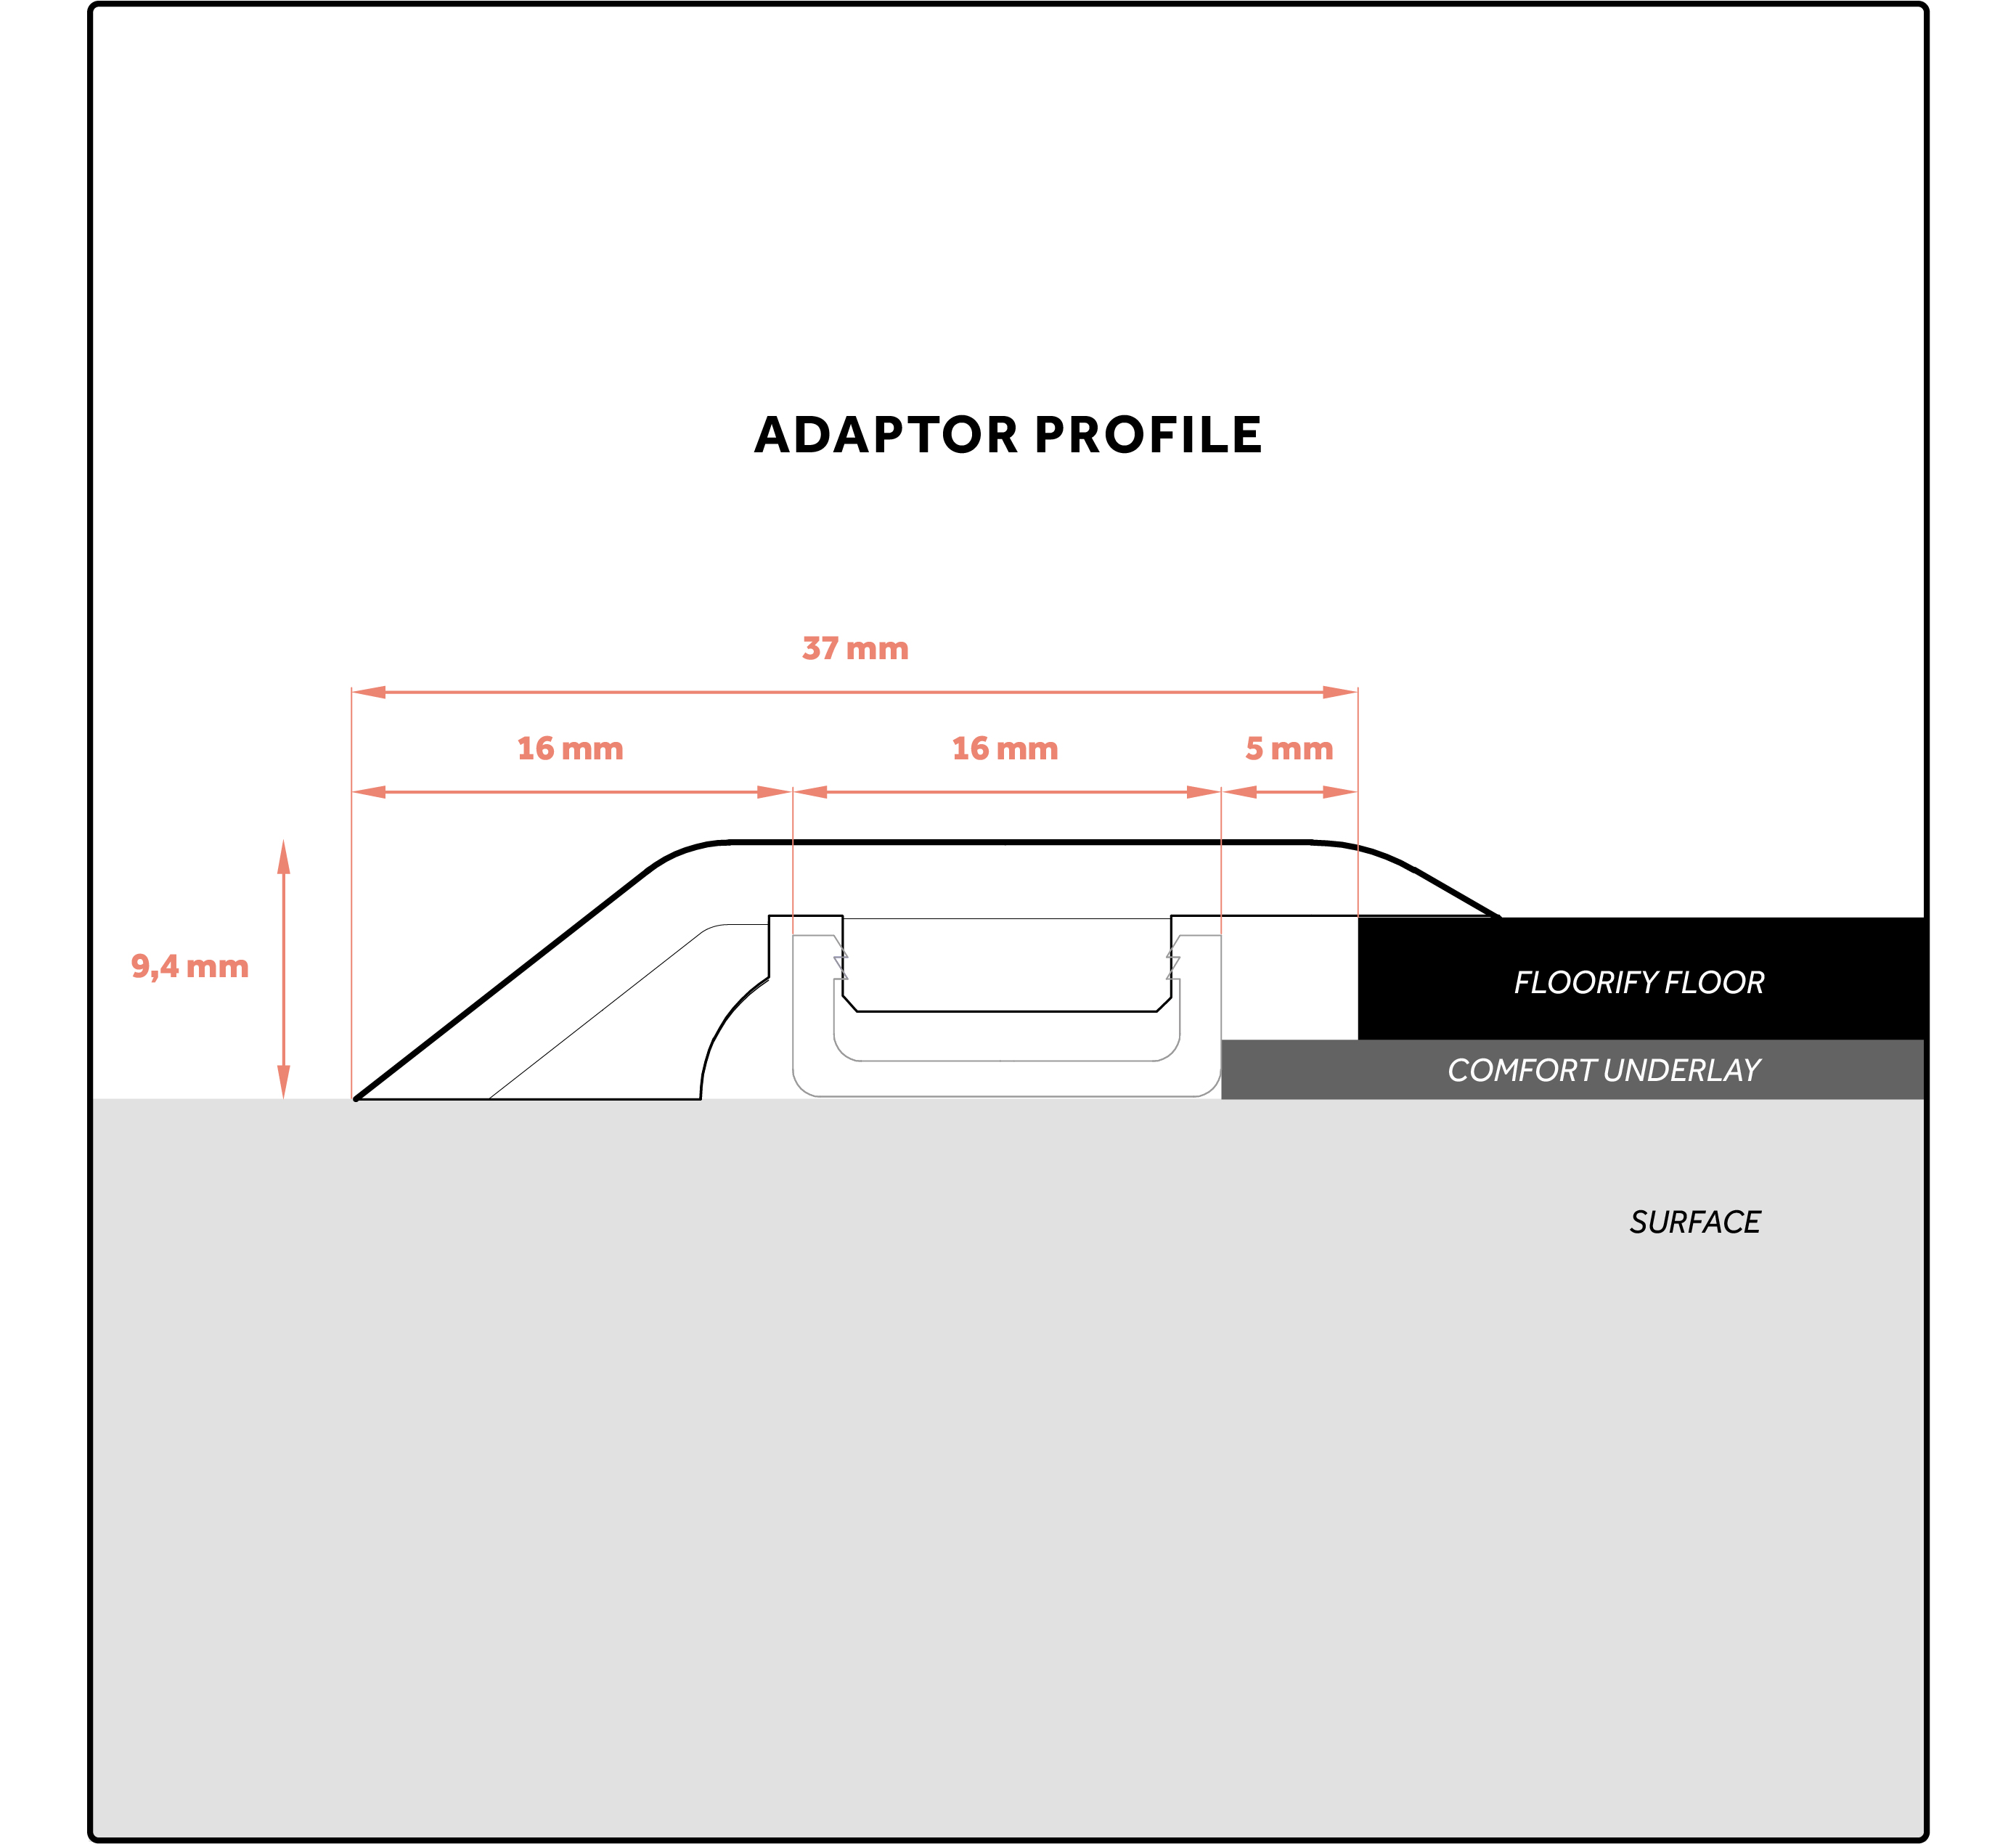 Floorify_-_Adaptor_profile.jpg